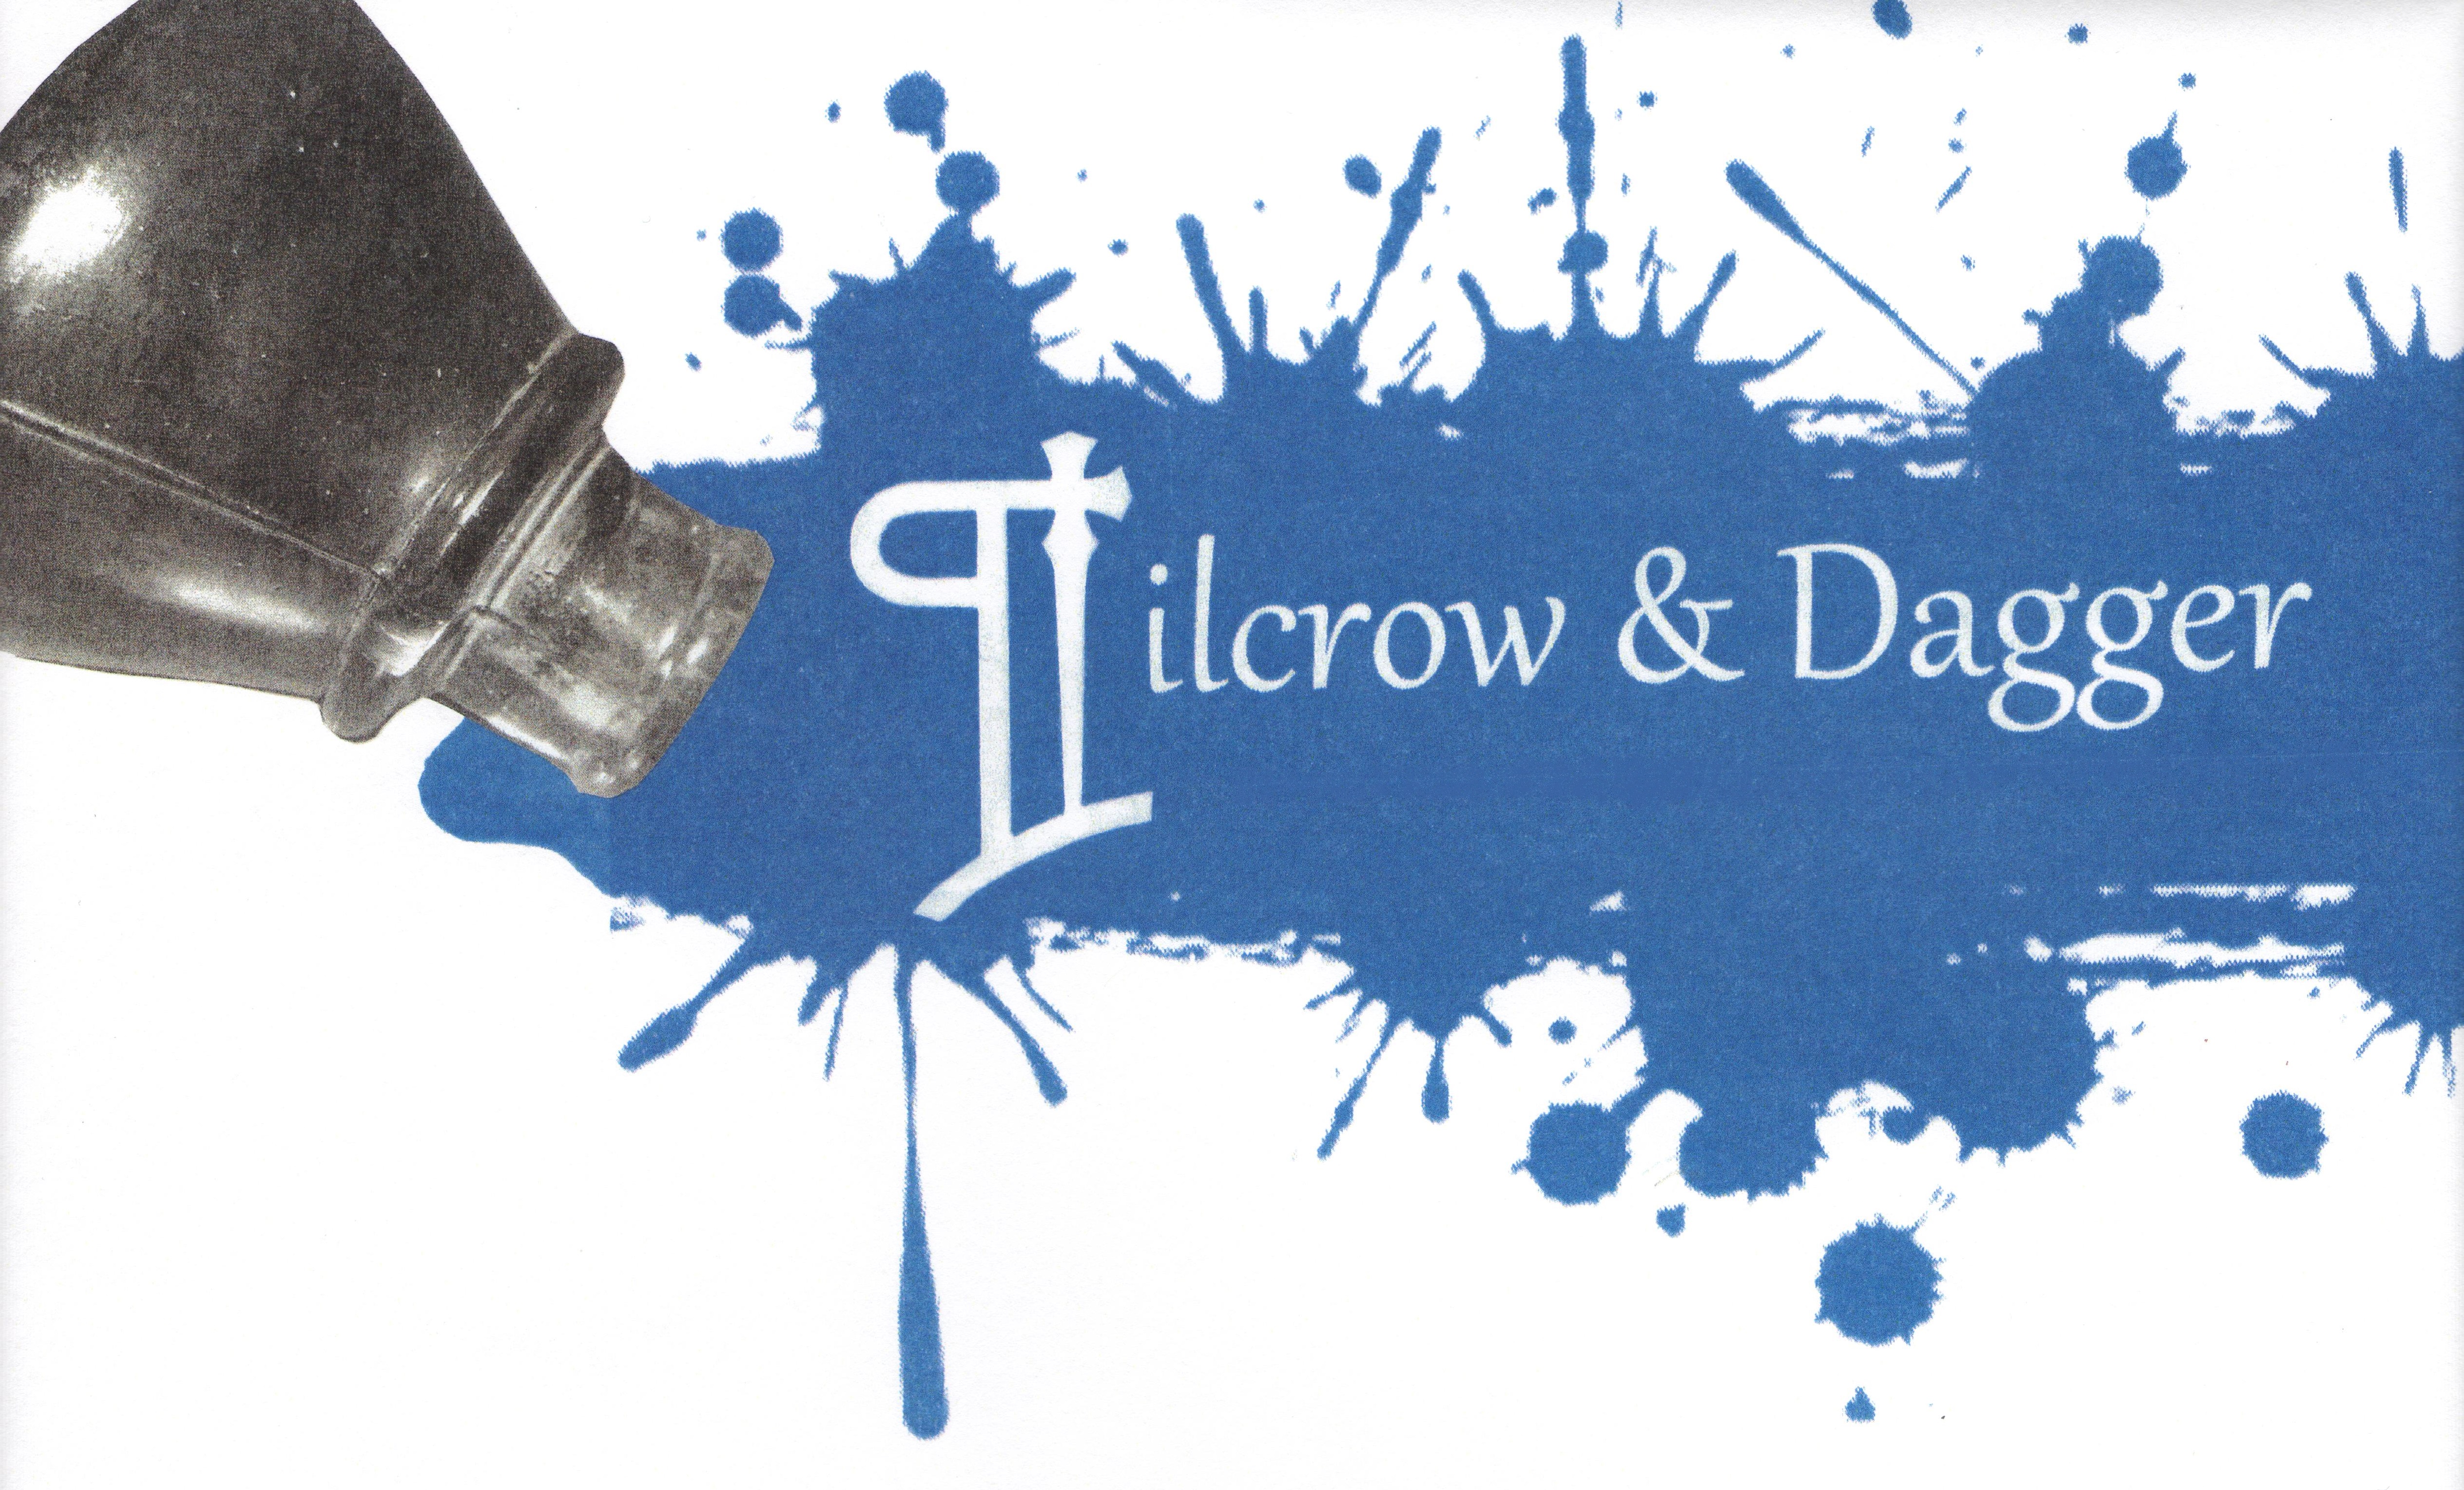 The Pilcrow & Dagger Literary Journal